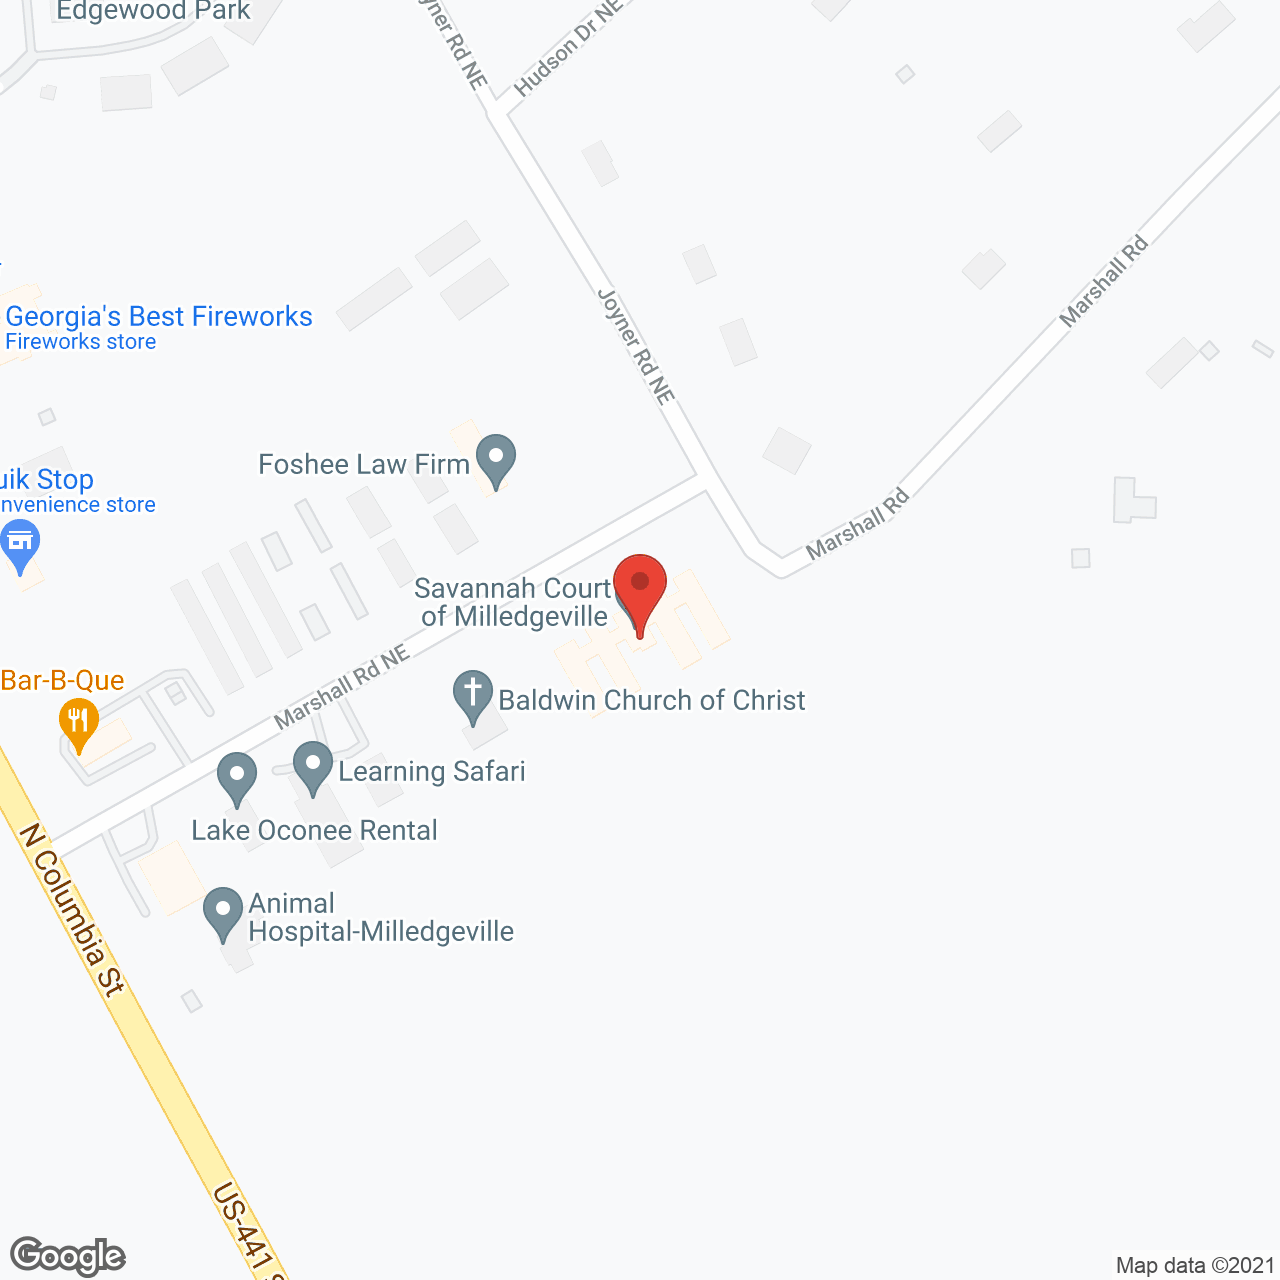 Savannah Court of Milledgeville in google map